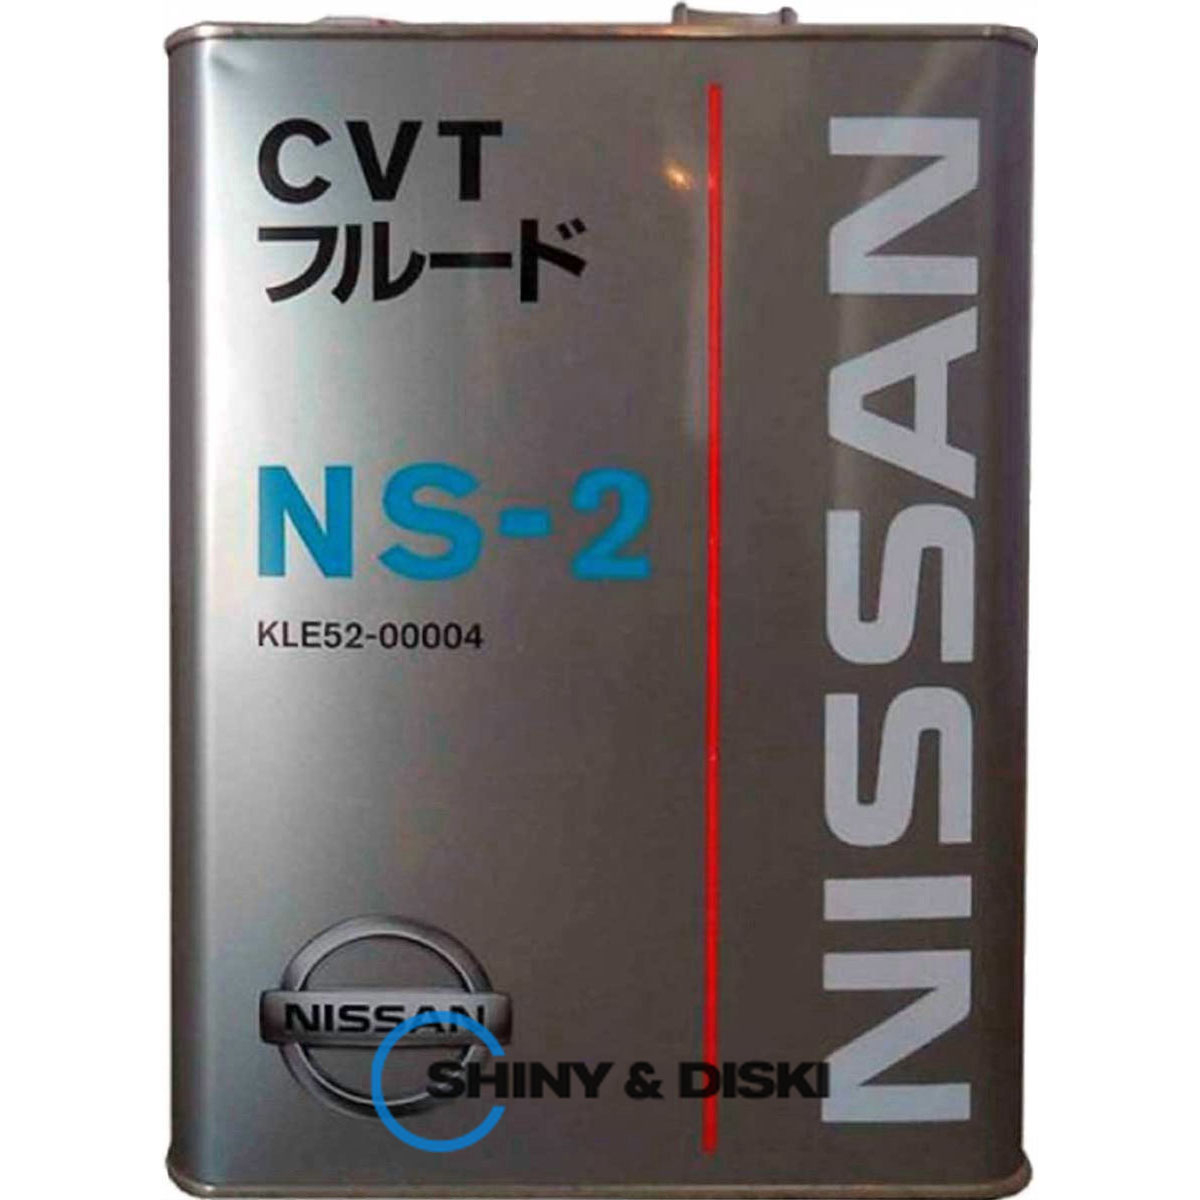 nissan cvt ns-2